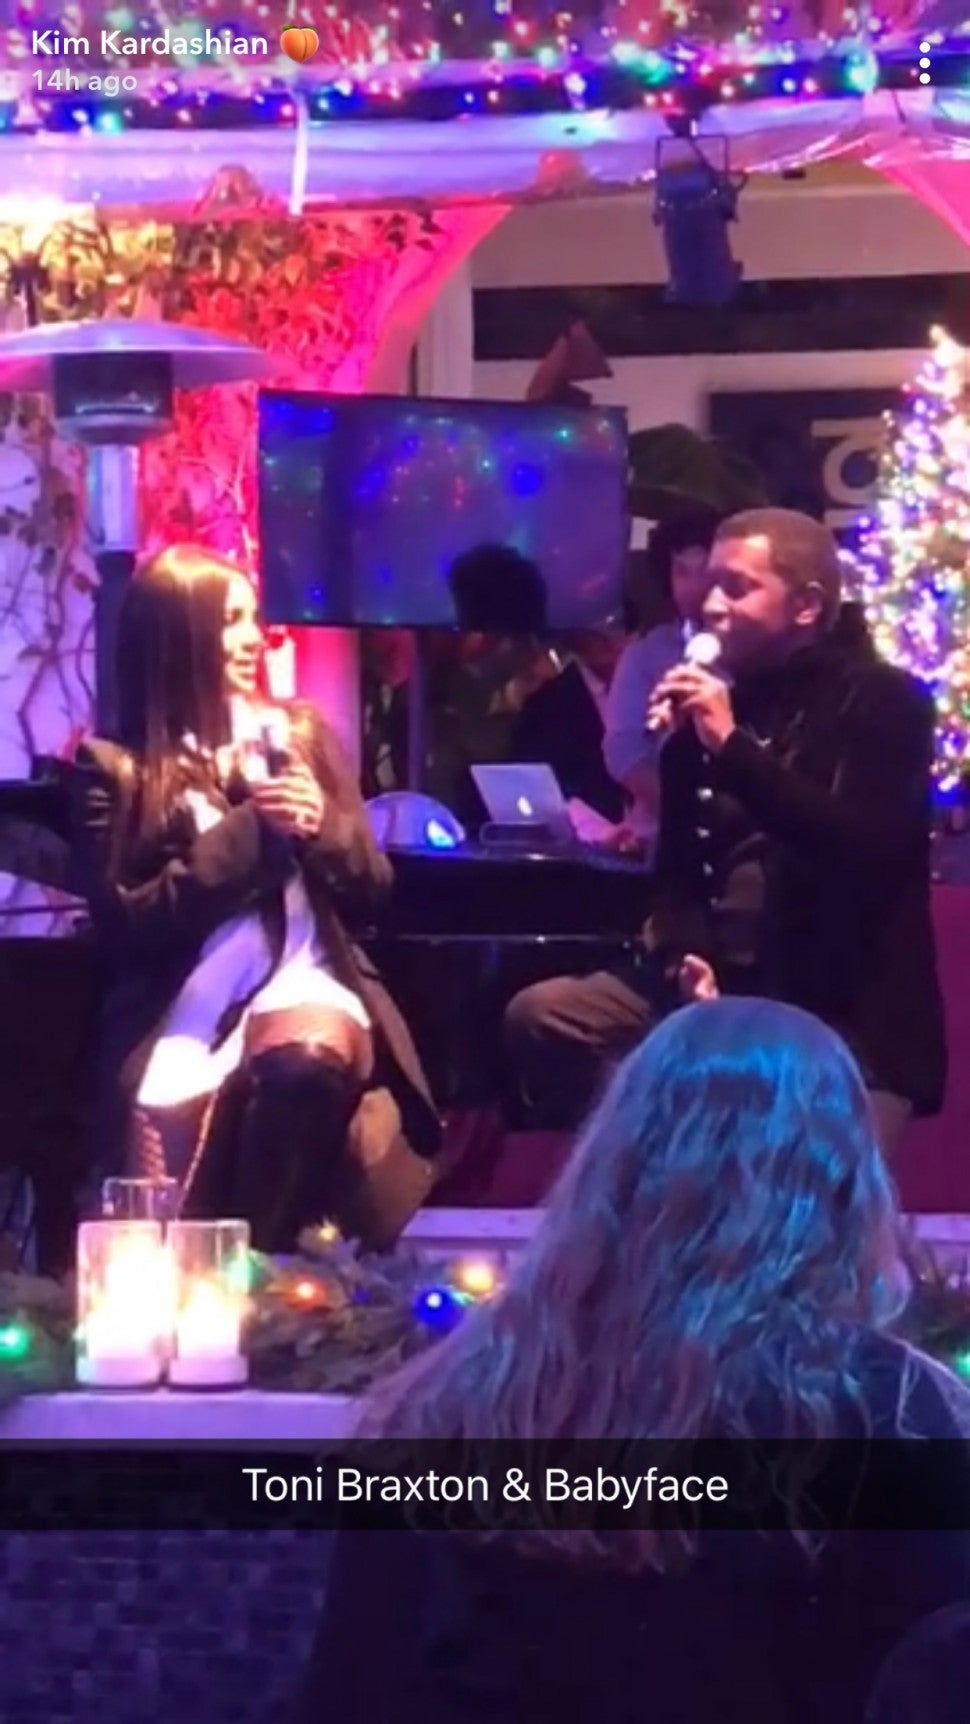 Toni Braxton and Babyface at Kardashian xmas party